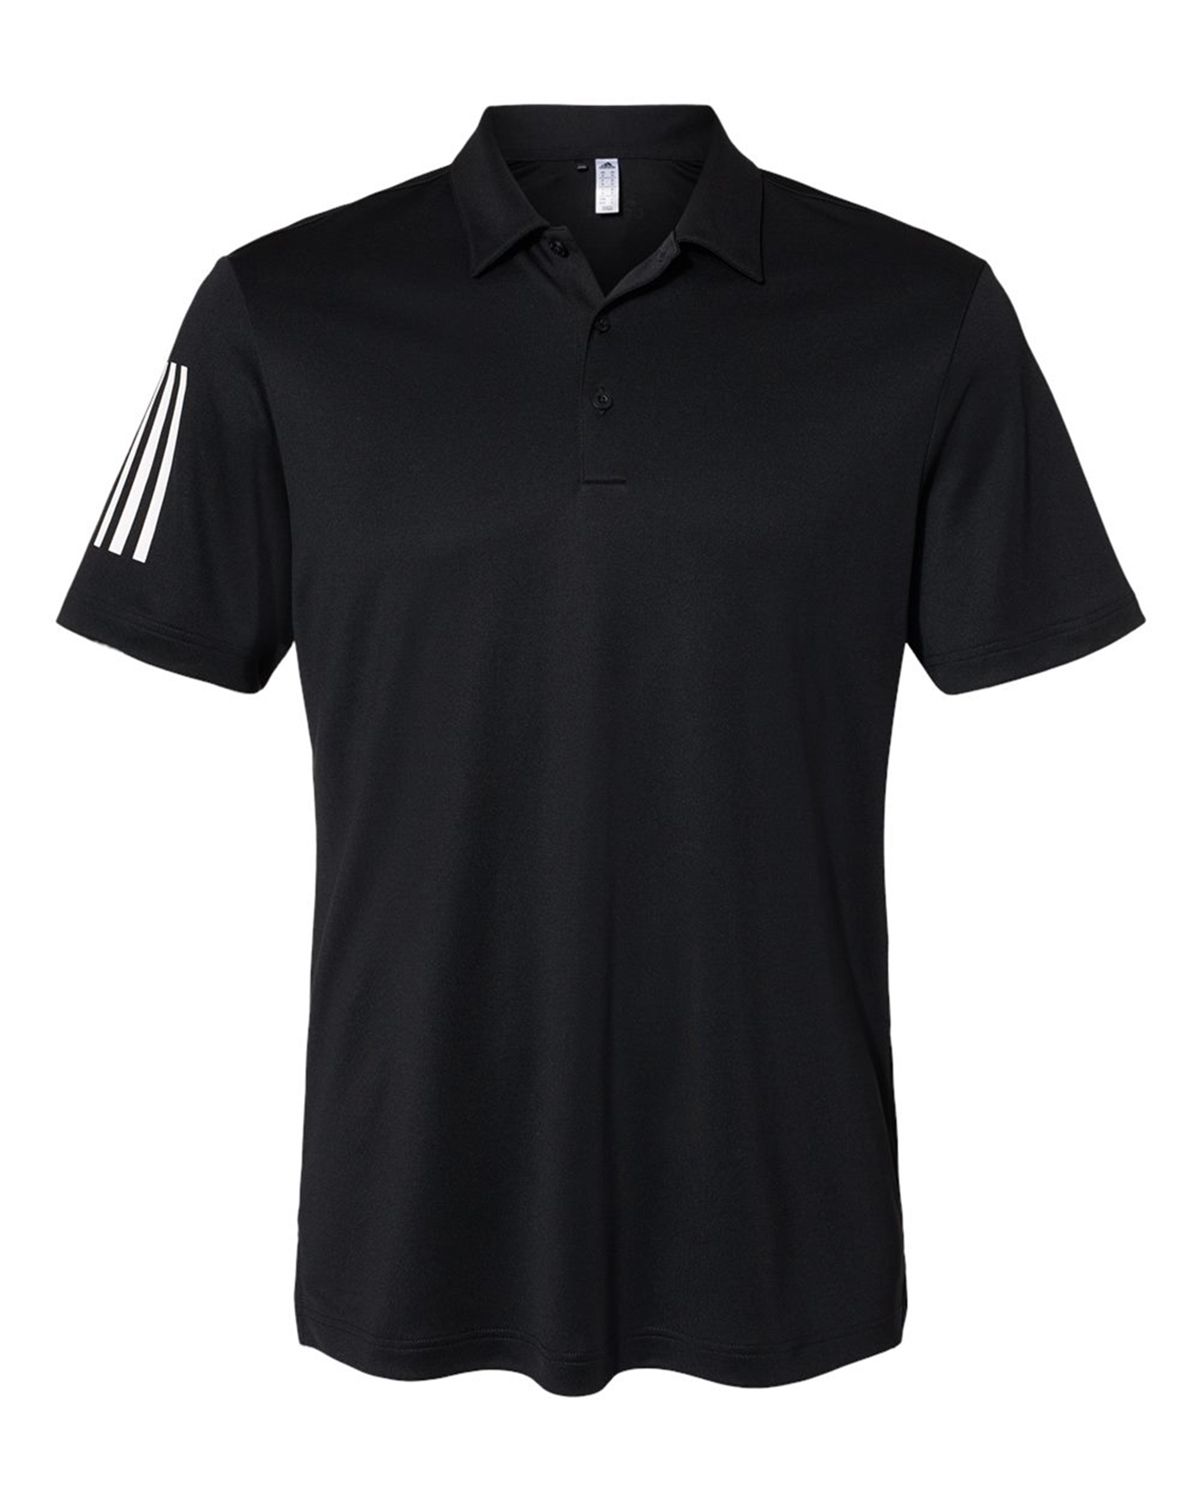 Adidas Golf Polo Sports Shirts 